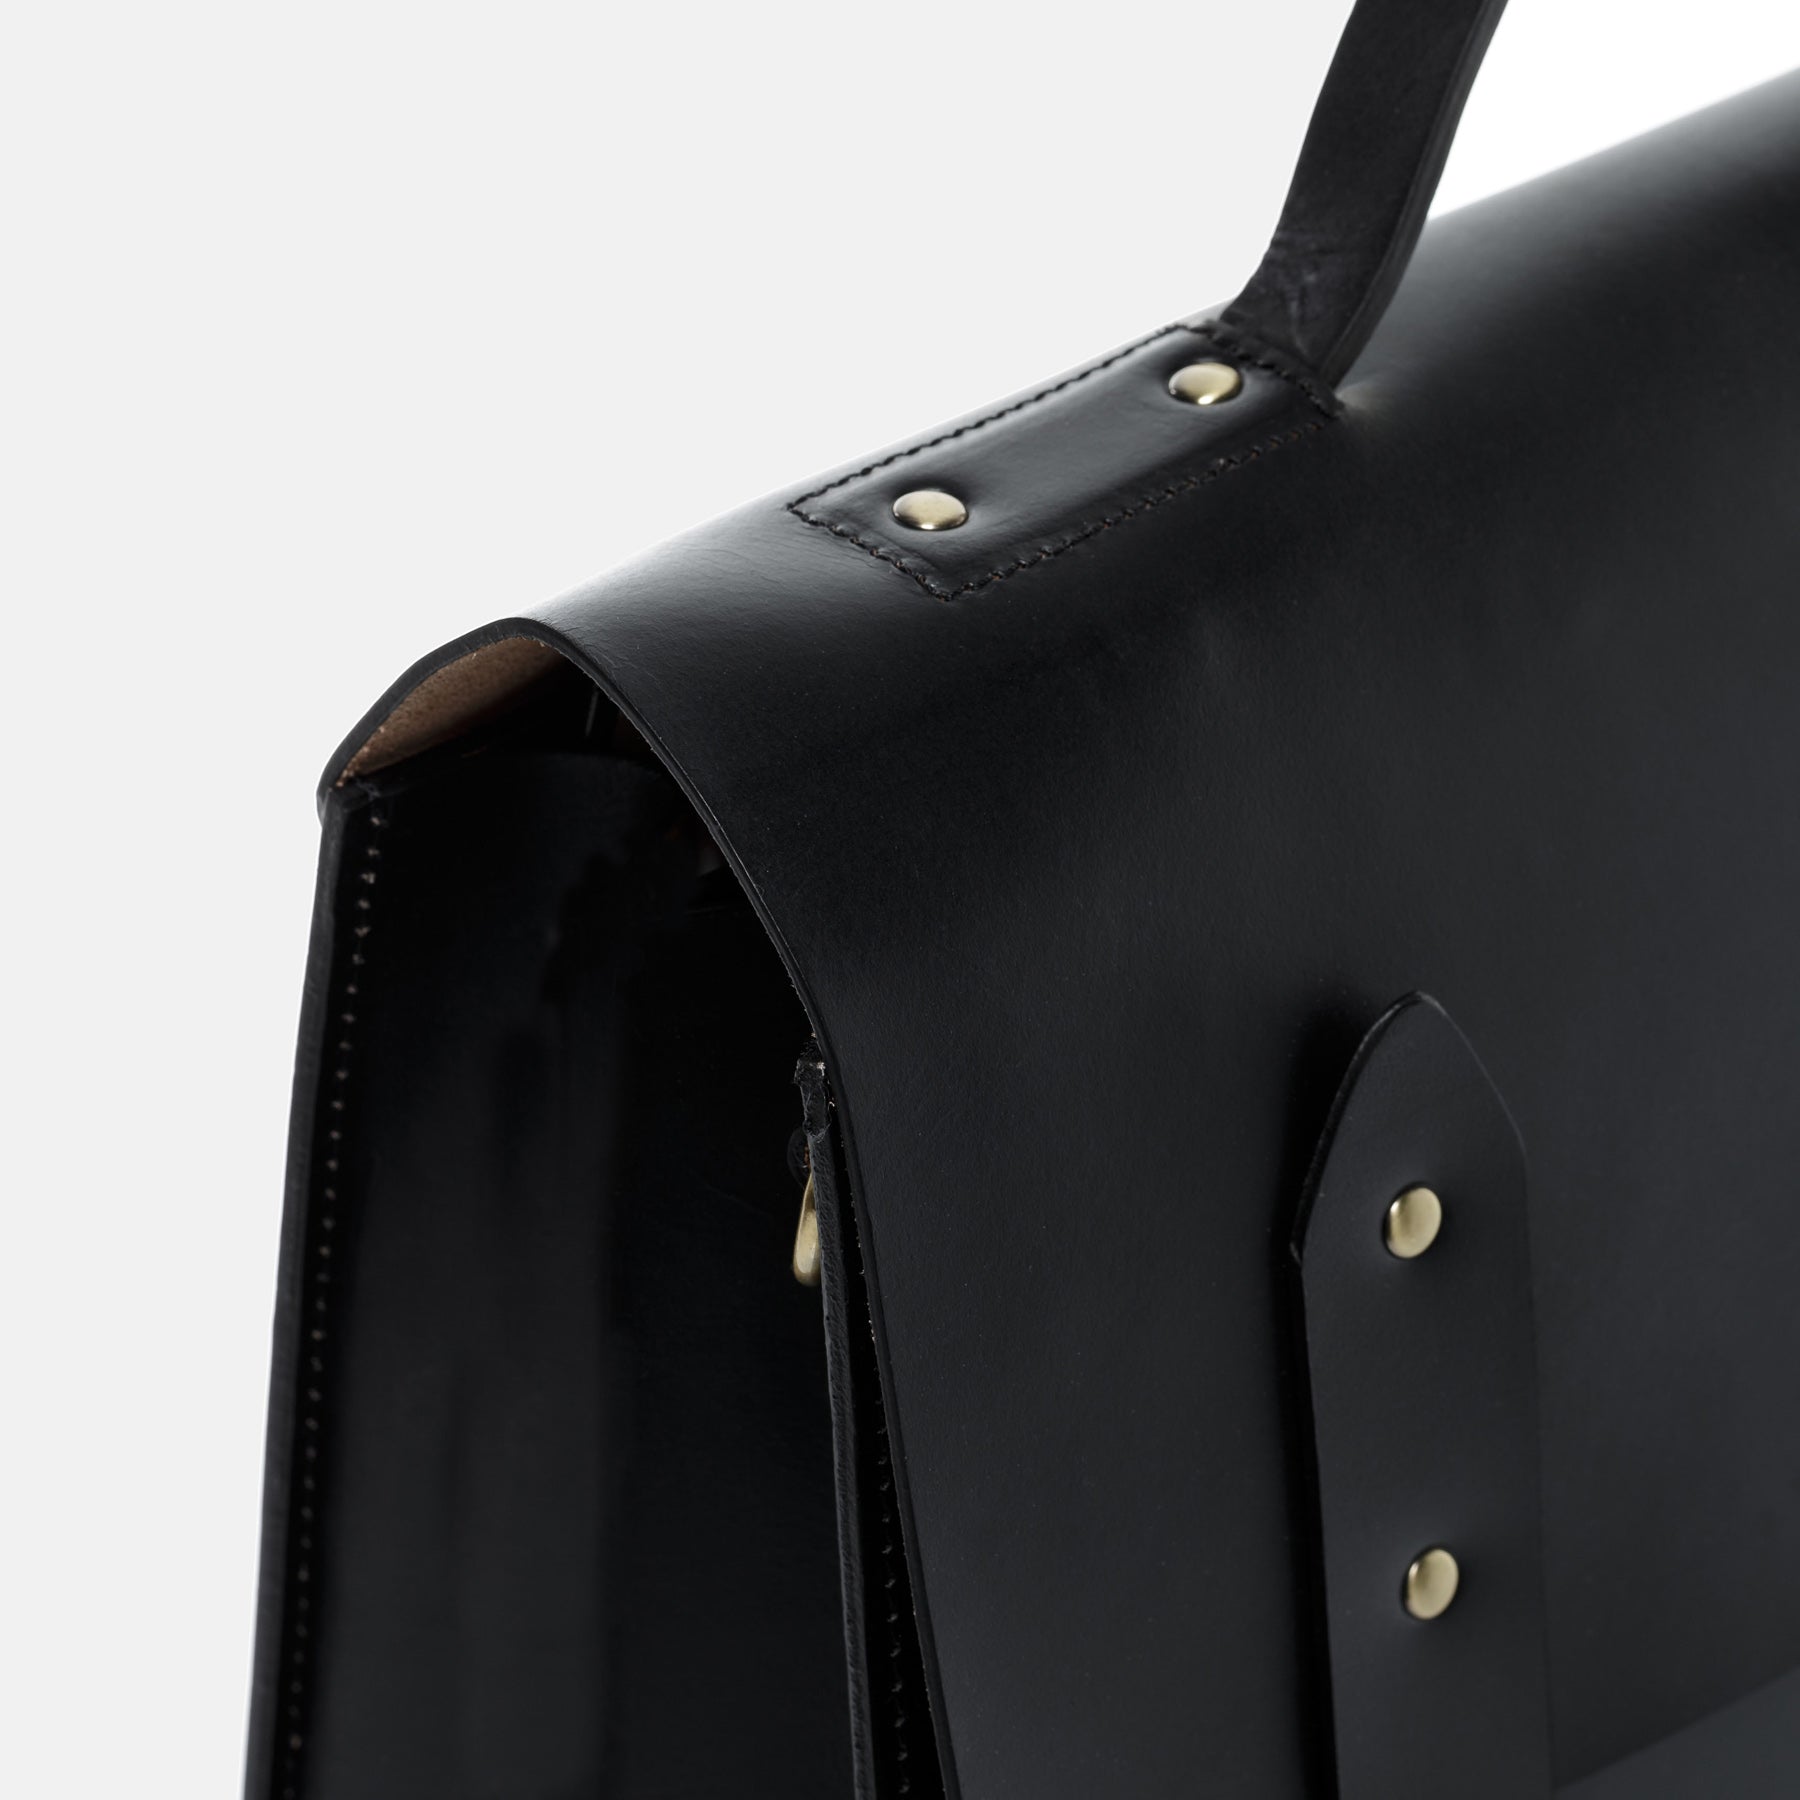 Briefcase BOSTON saddle leather black